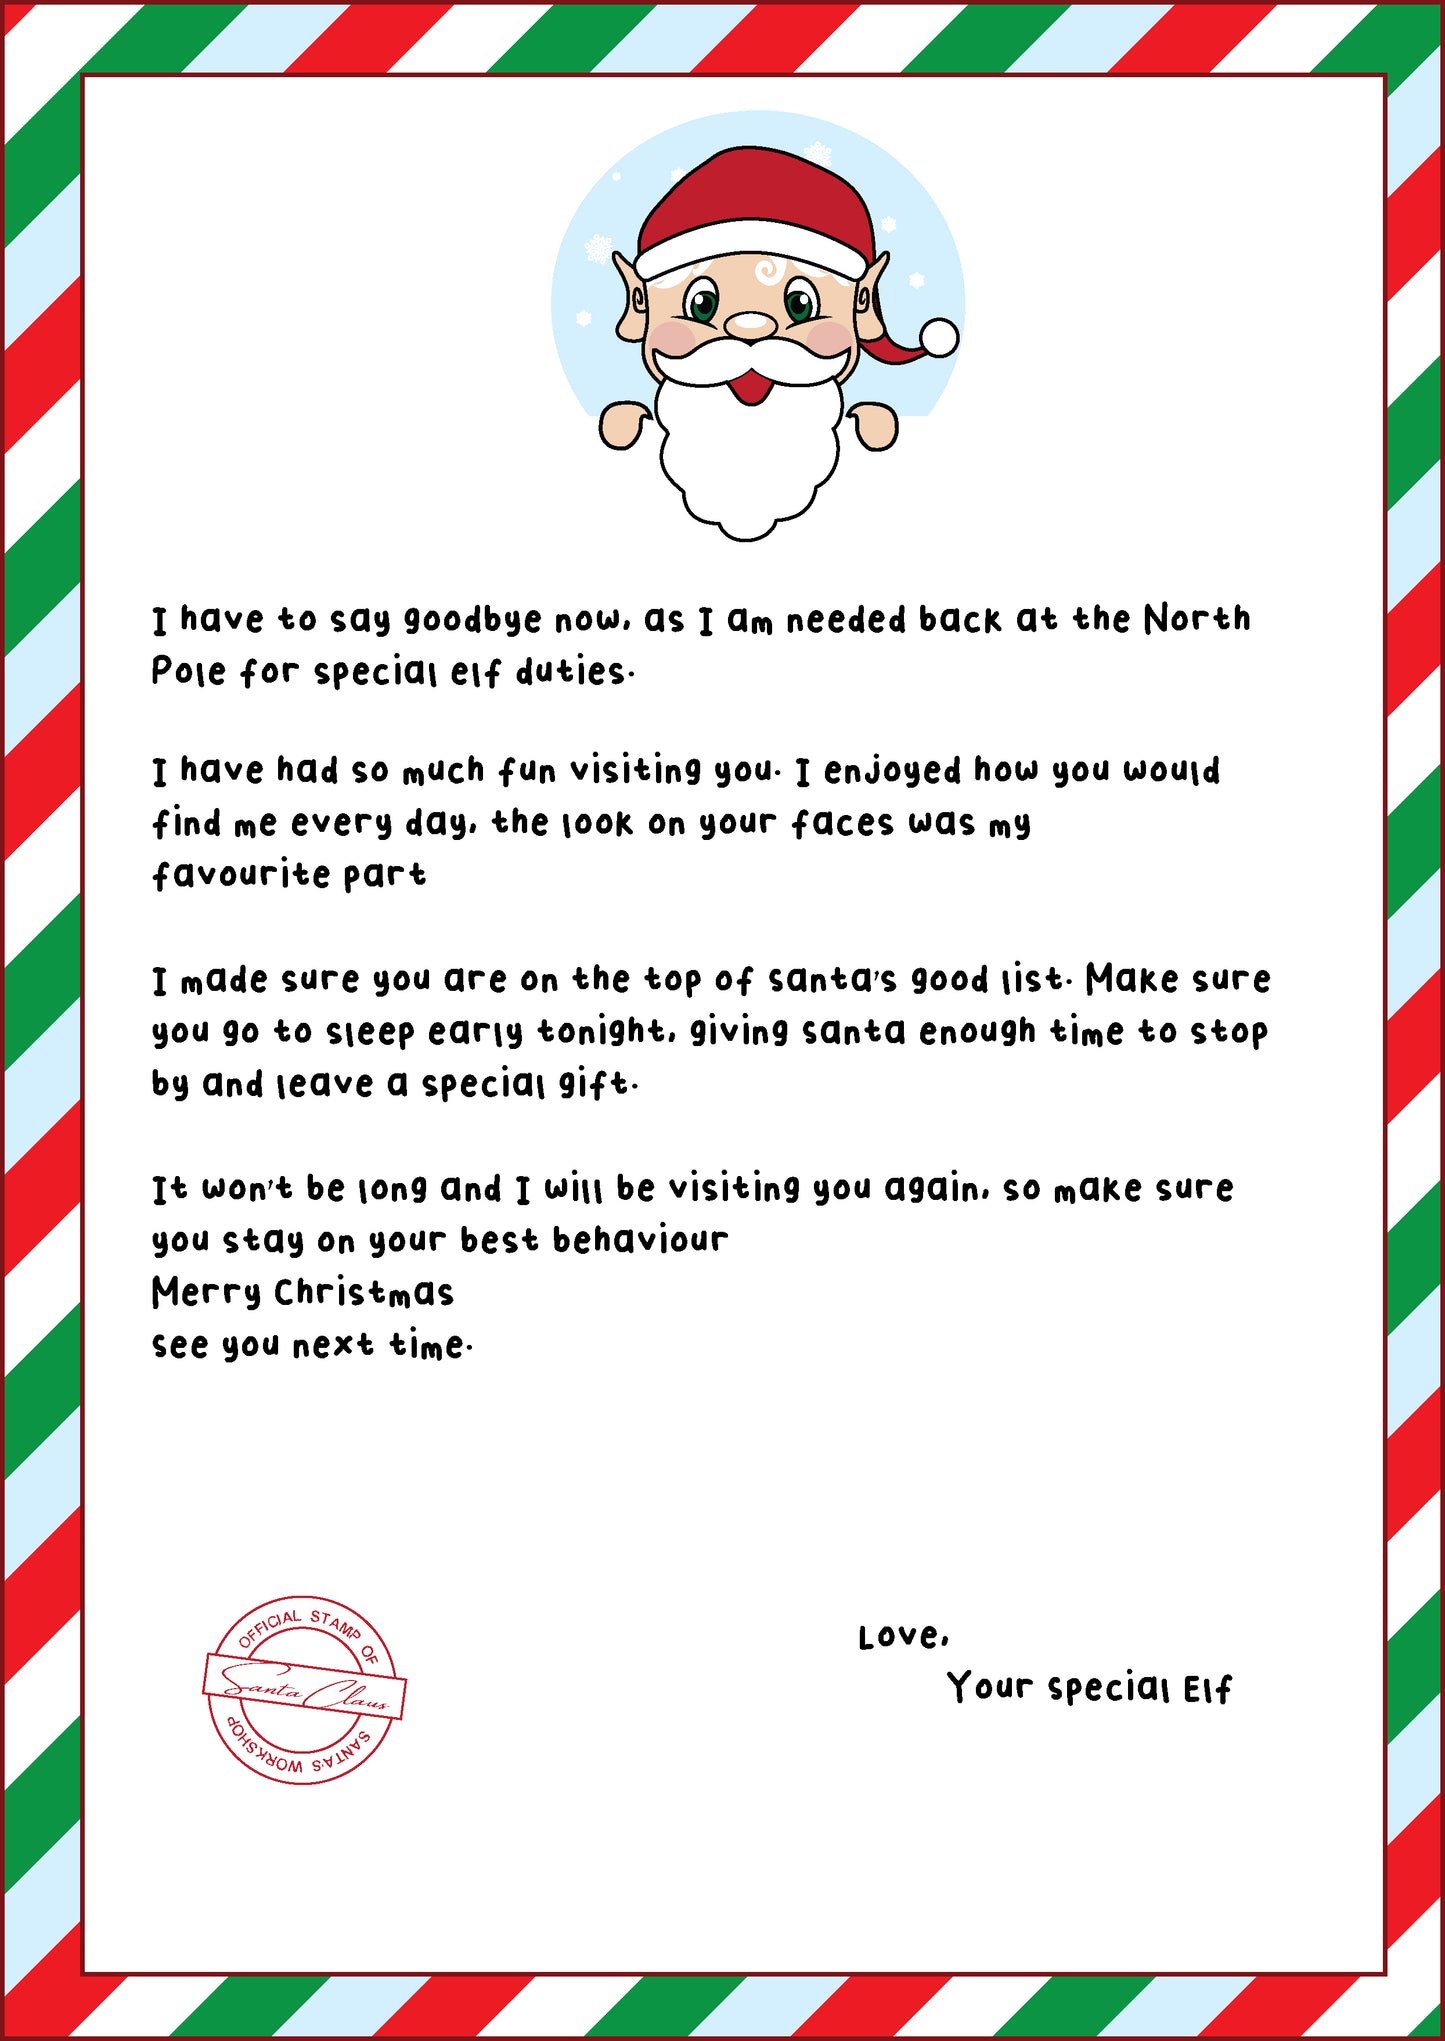 Goodbye letter one elf